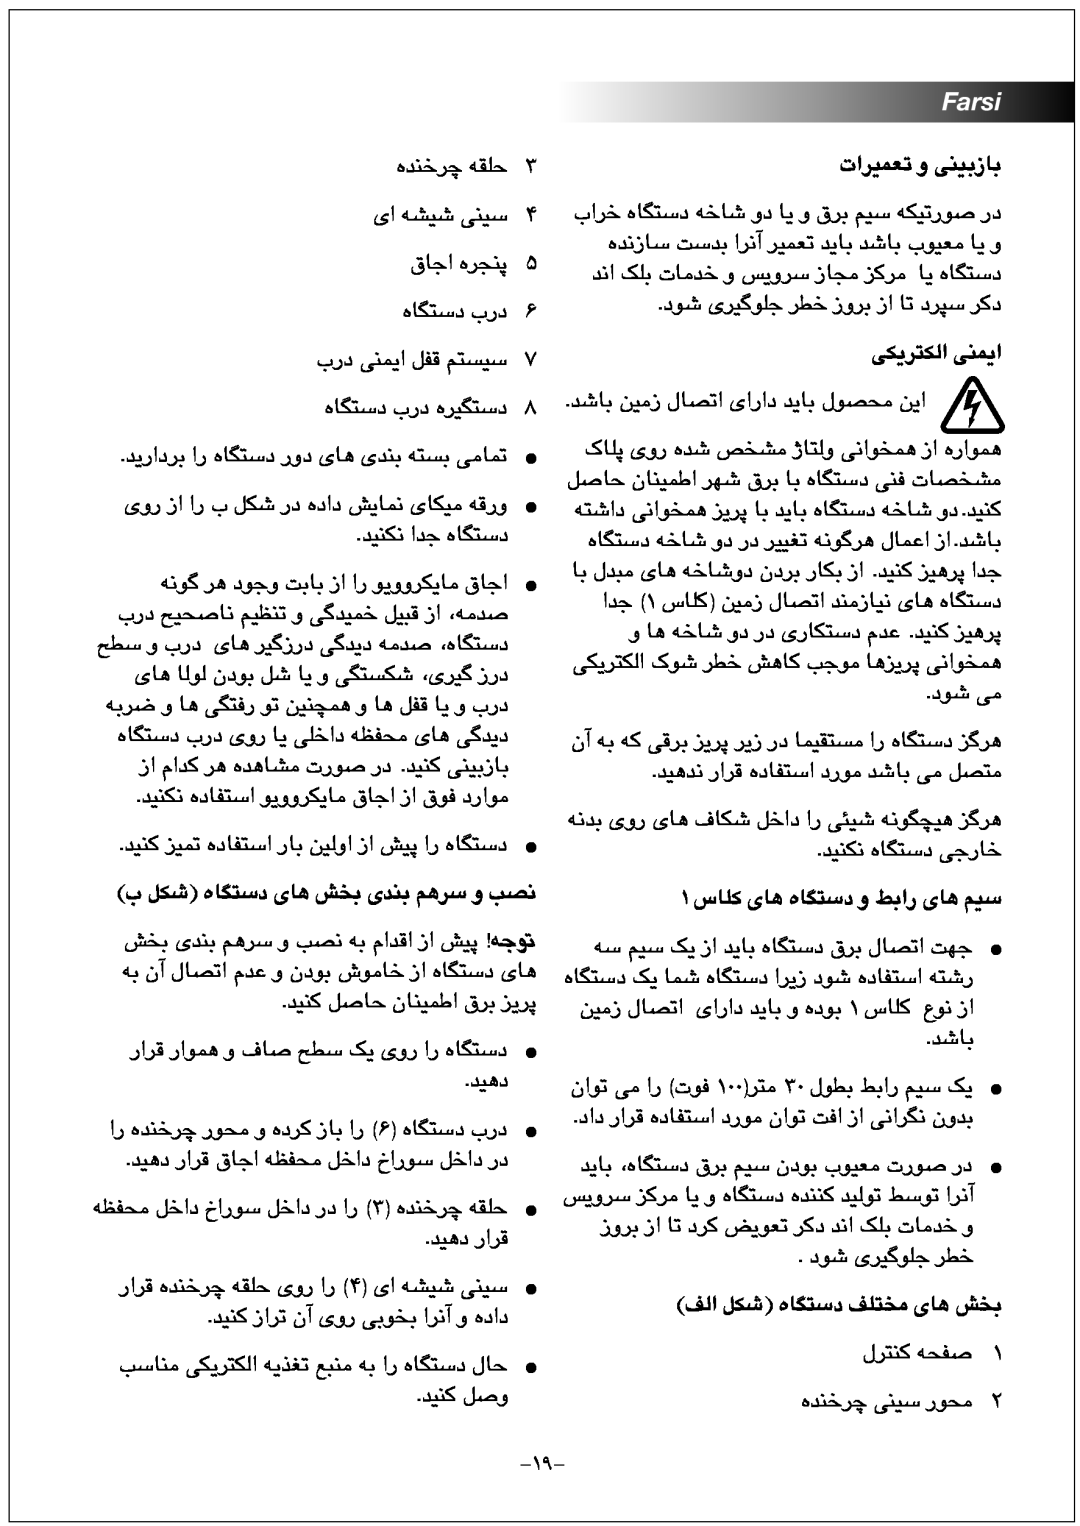 Black & Decker MZ2300P manual Farsi, ﺕﺍﺮﯿﻤﻌﺗ ﻭ ﯽﻨﯿﺑﺯﺎﺑ, ﯽﮑﯾﺮﺘﮑﻟﺍ ﯽﻨﻤﯾﺍ, ﺏ ﻞﮑﺷ ﻩﺎﮕﺘﺳﺩ ﯼﺎﻫ ﺶﺨﺑ ﯼﺪﻨﺑ ﻢﻫﺮﺳ ﻭ ﺐﺼﻧ 